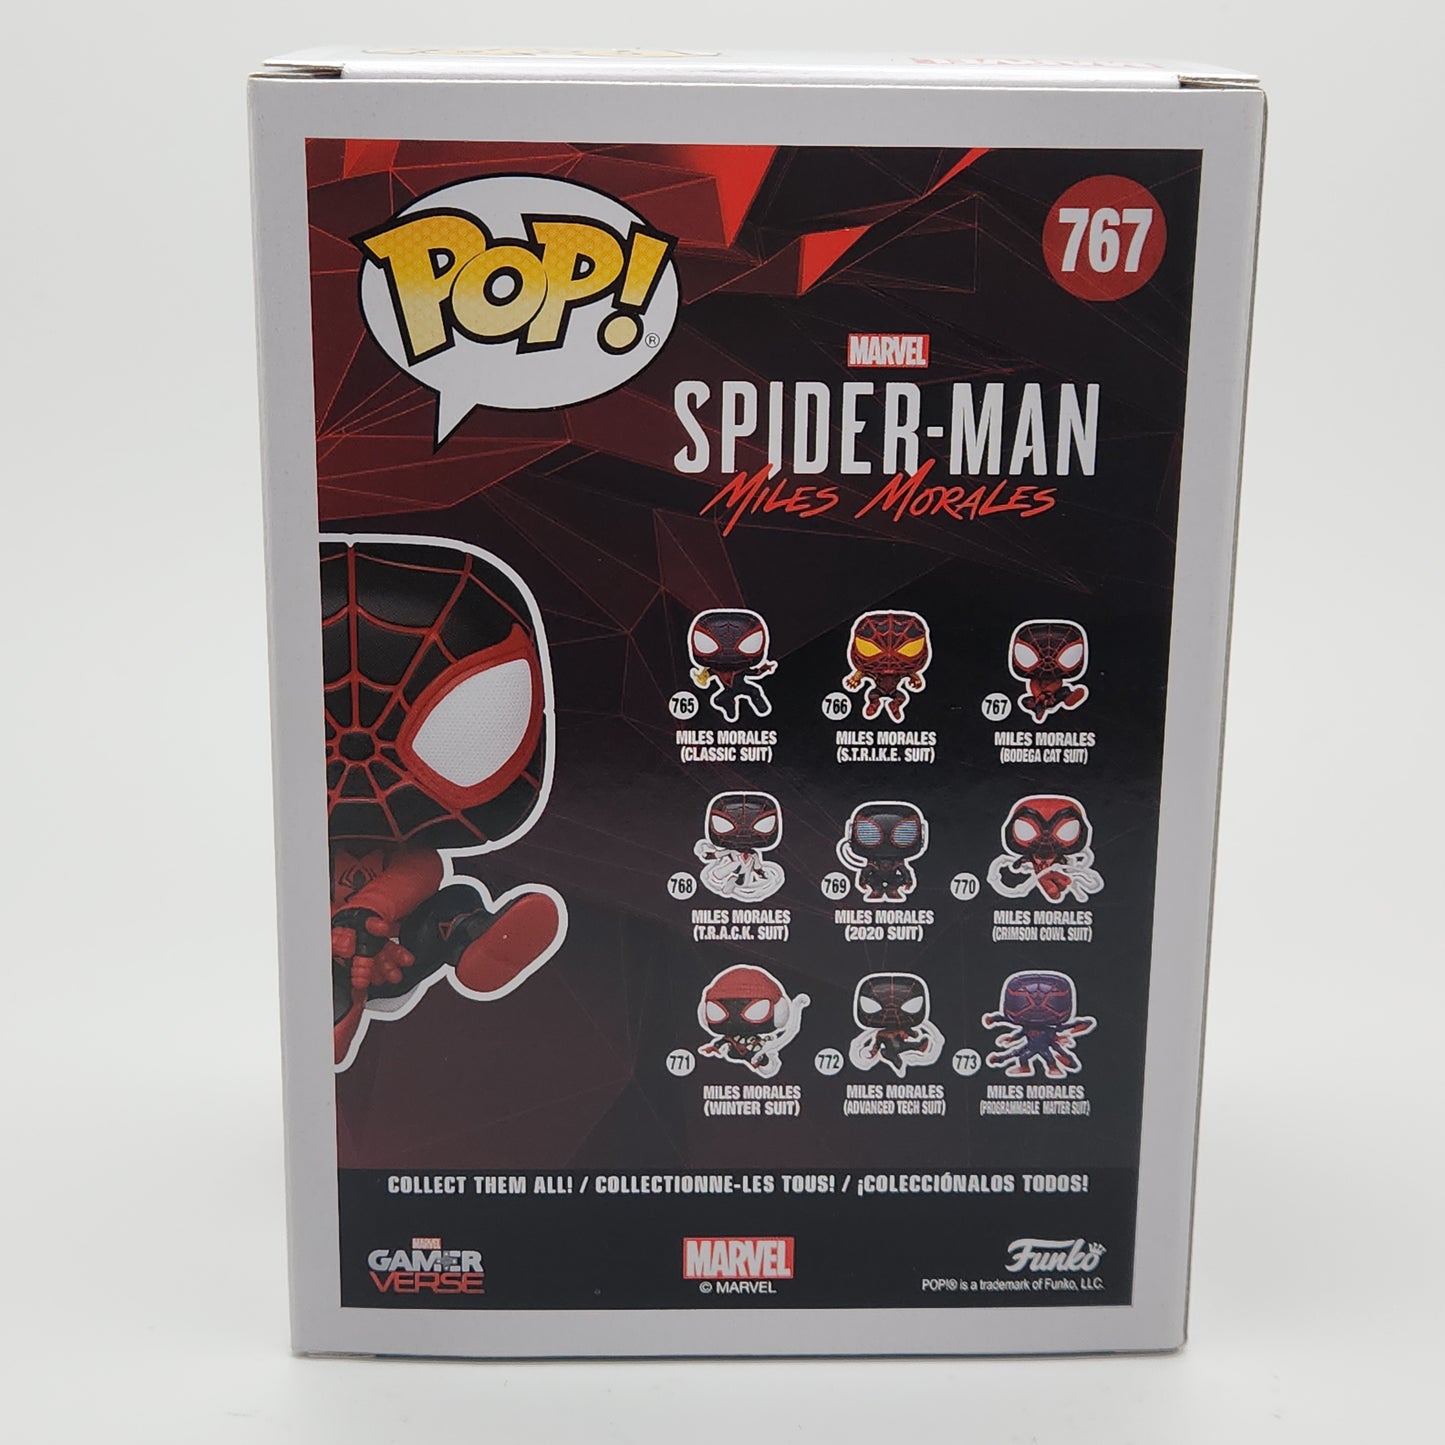 Funko Pop! Marvel- Spider-Man: Miles Morales (Bodega Cat Suit)